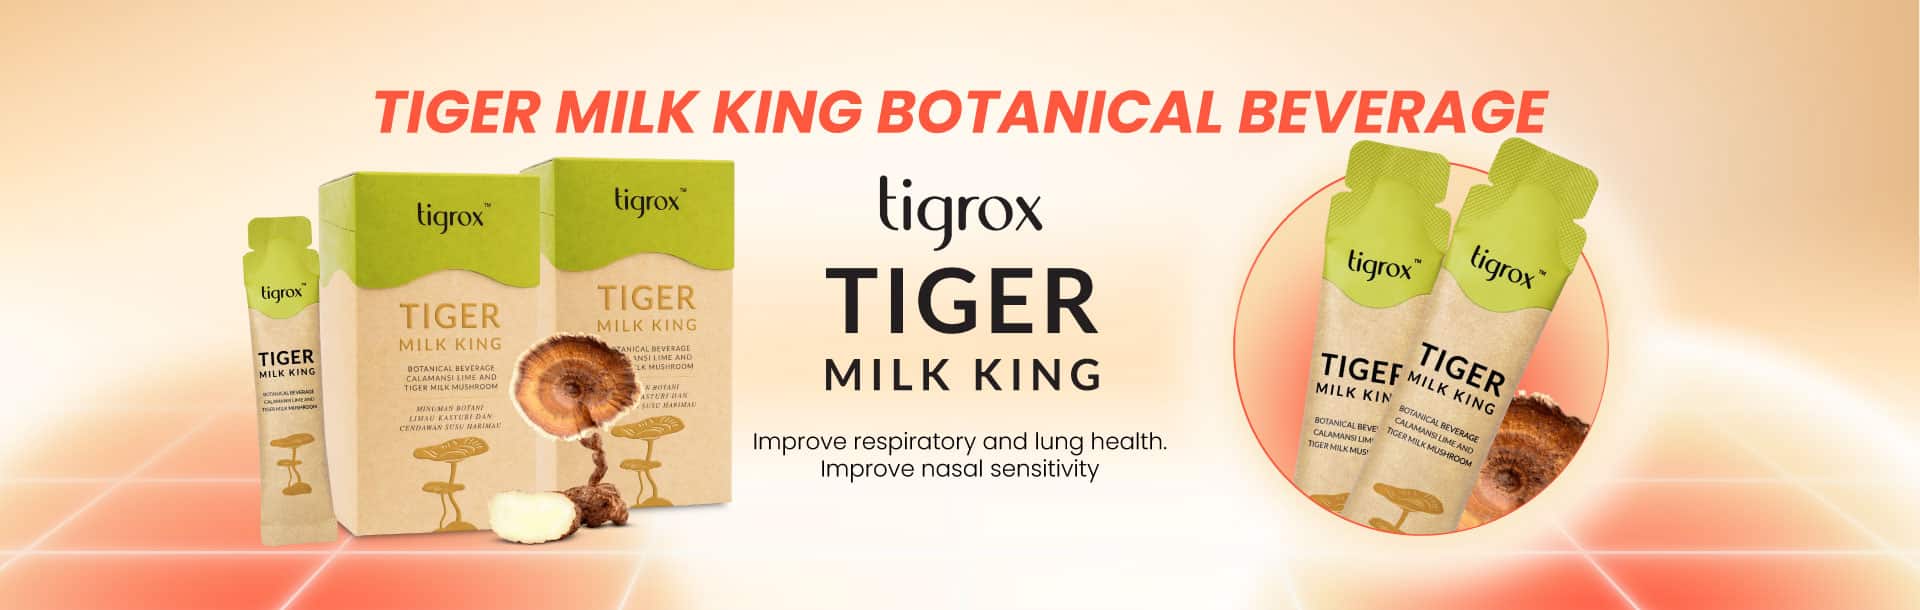 Tiger Milk King Botanical Beverage